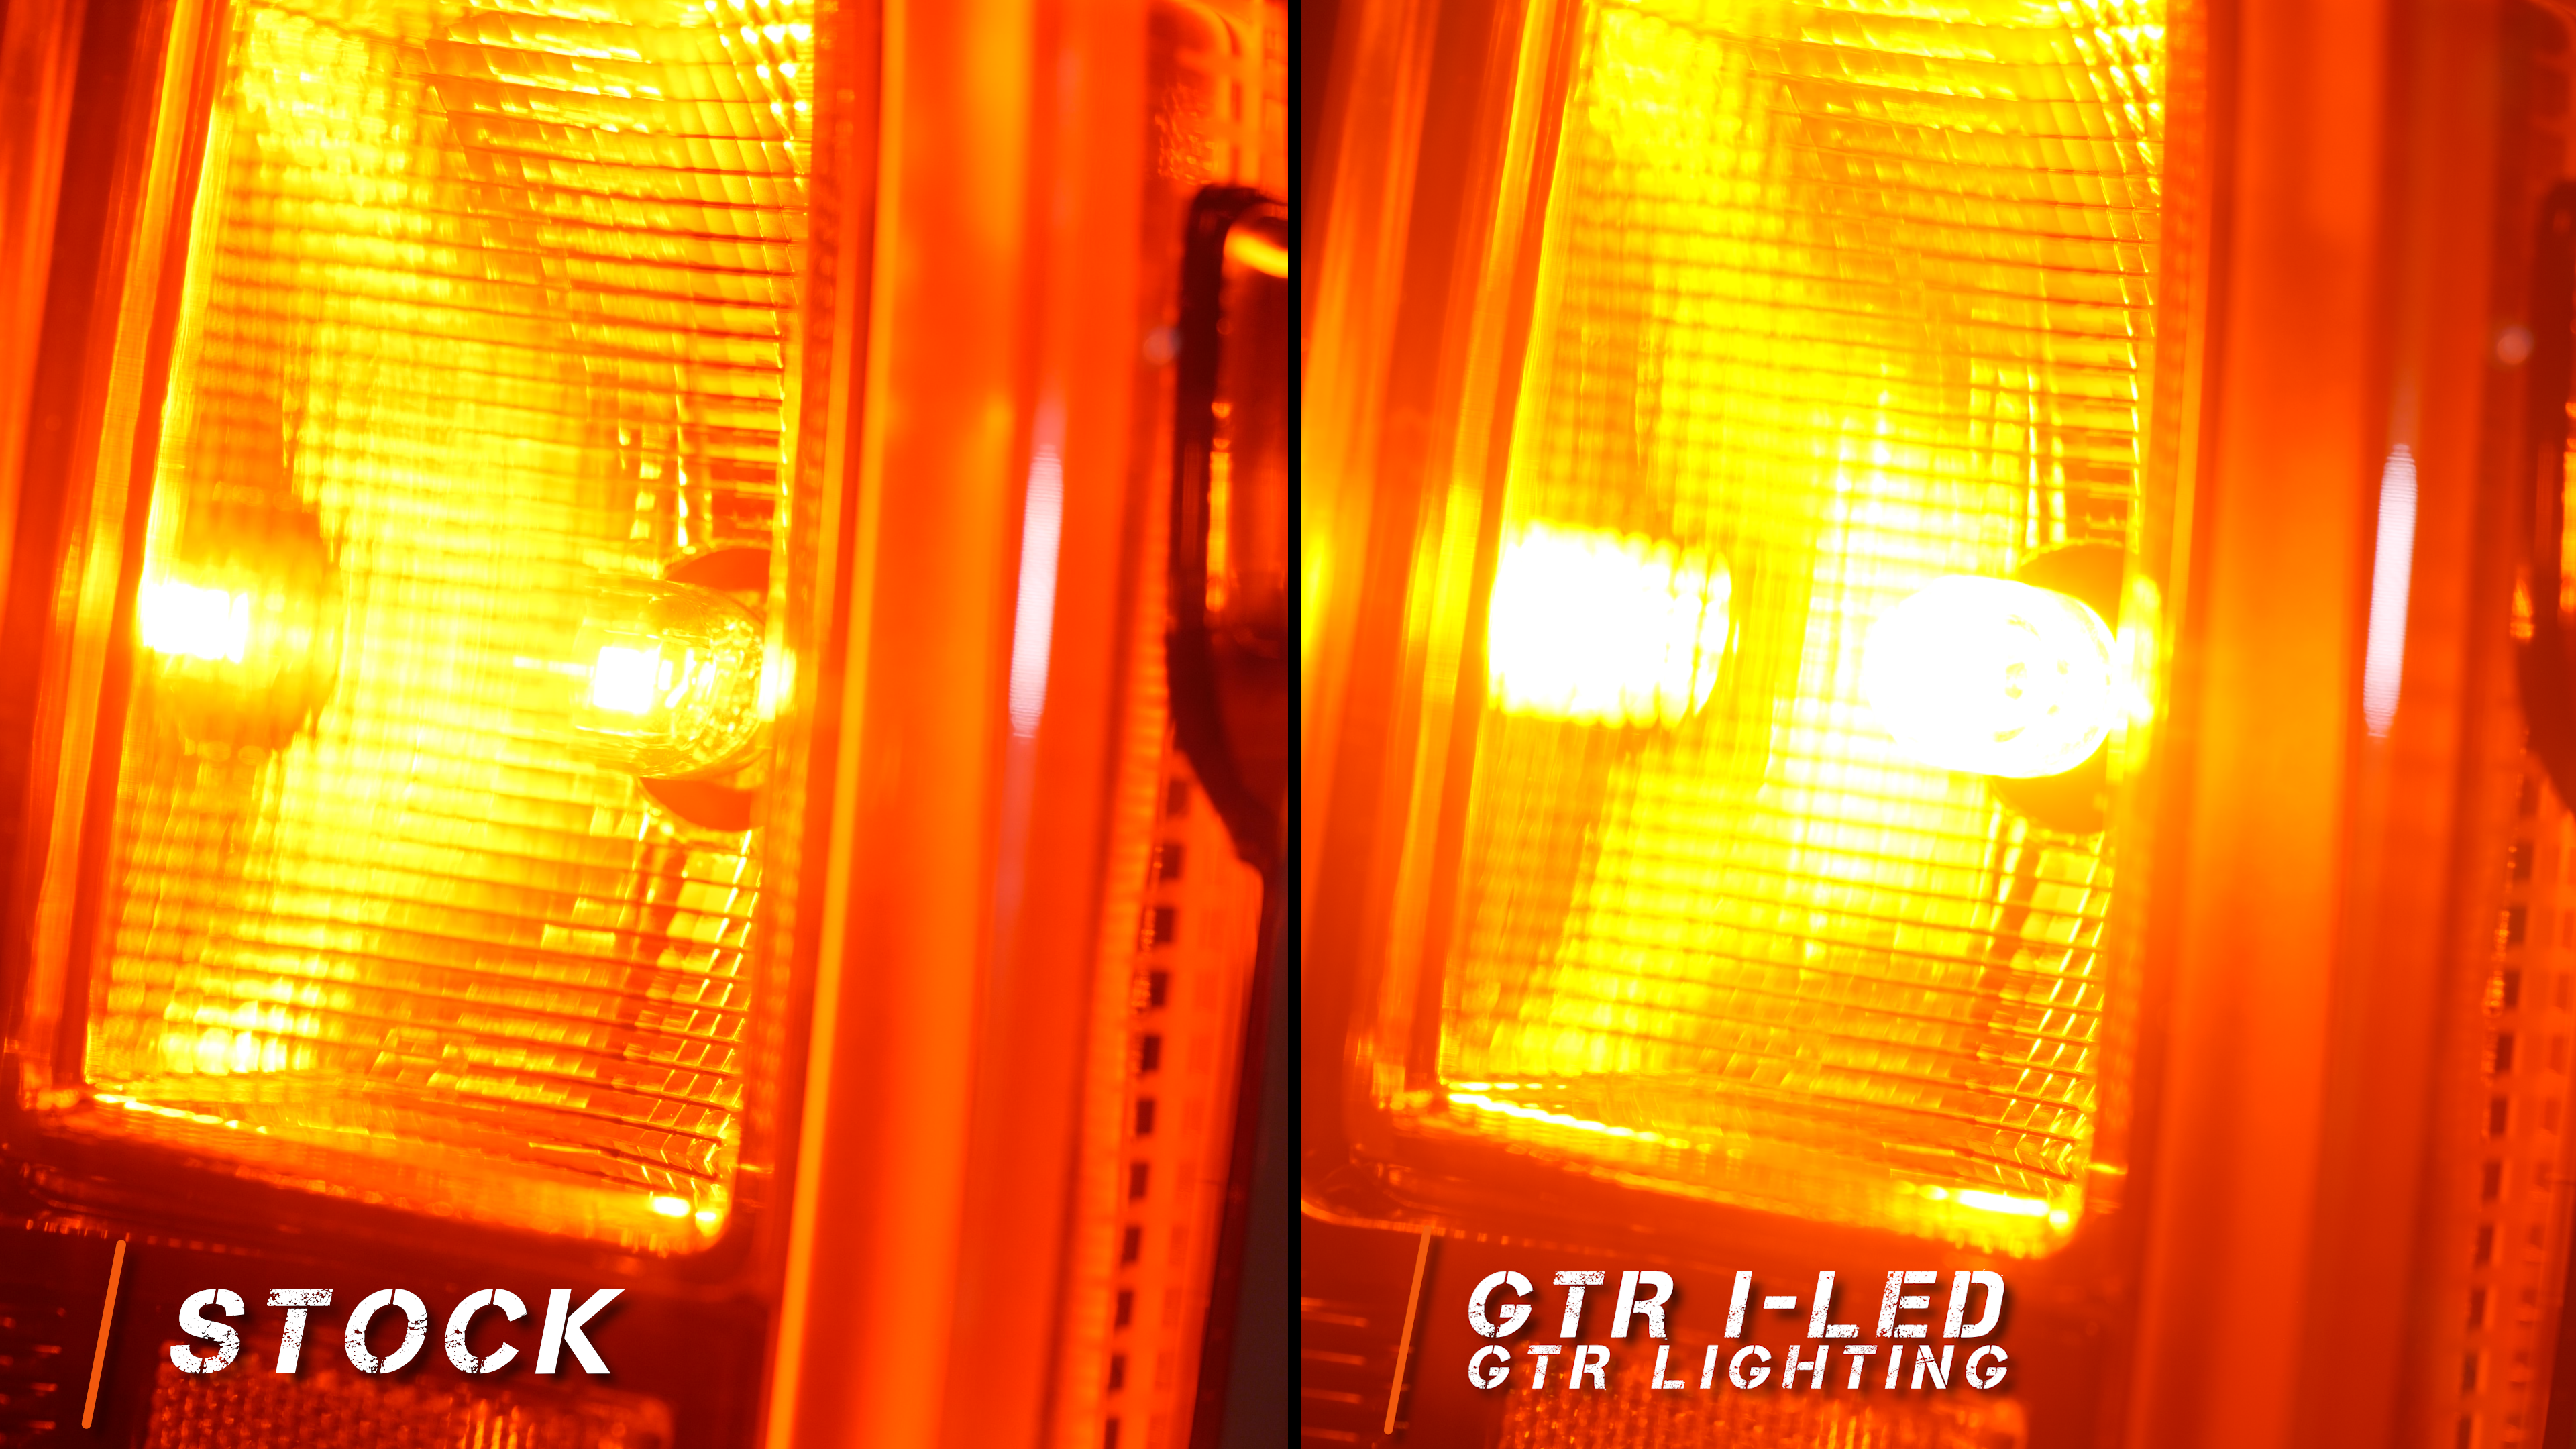 The Ultra i-LED By GTR Lighting | The Most Innovative LED Turn Signal Bulbs